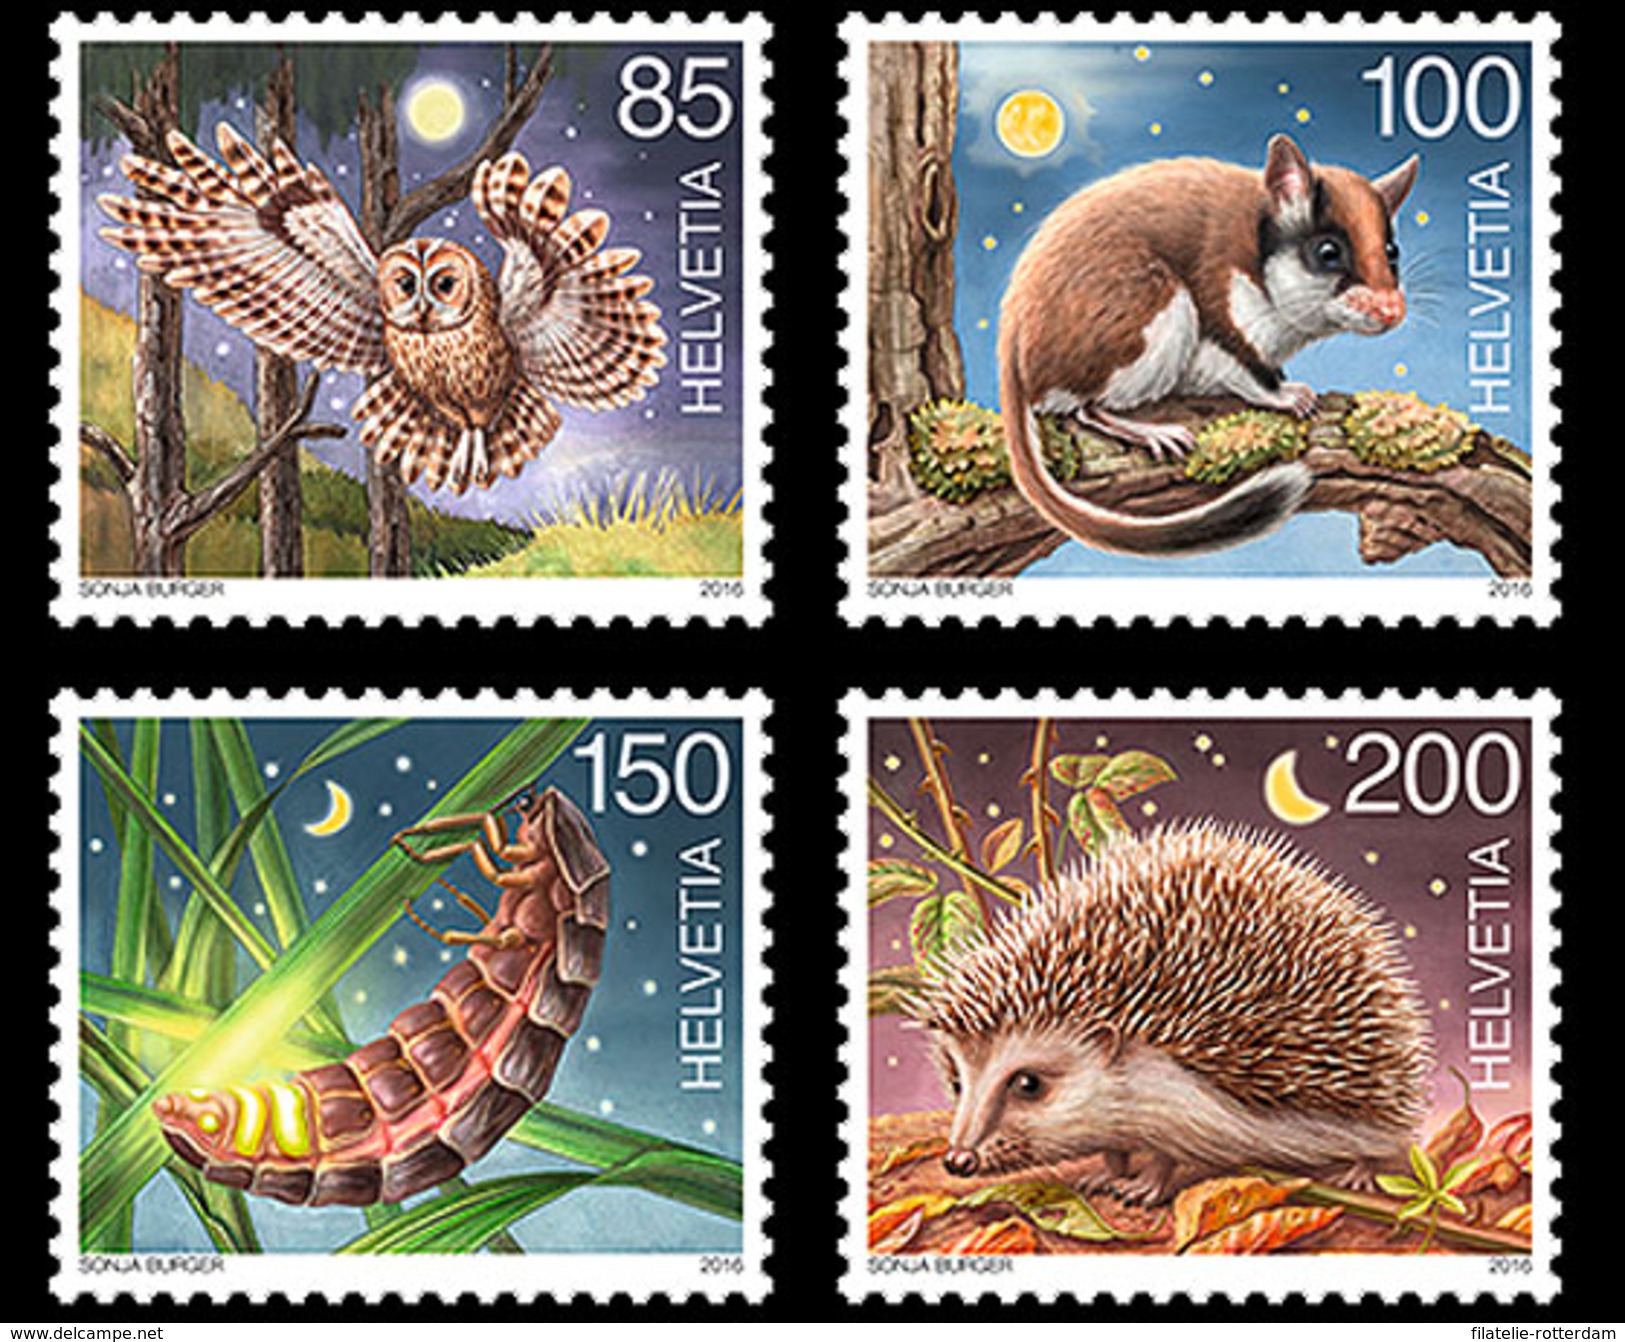 Zwitserland / Suisse - Postfris / MNH - Complete Set Nachtdieren 2016 NEW!! - Unused Stamps